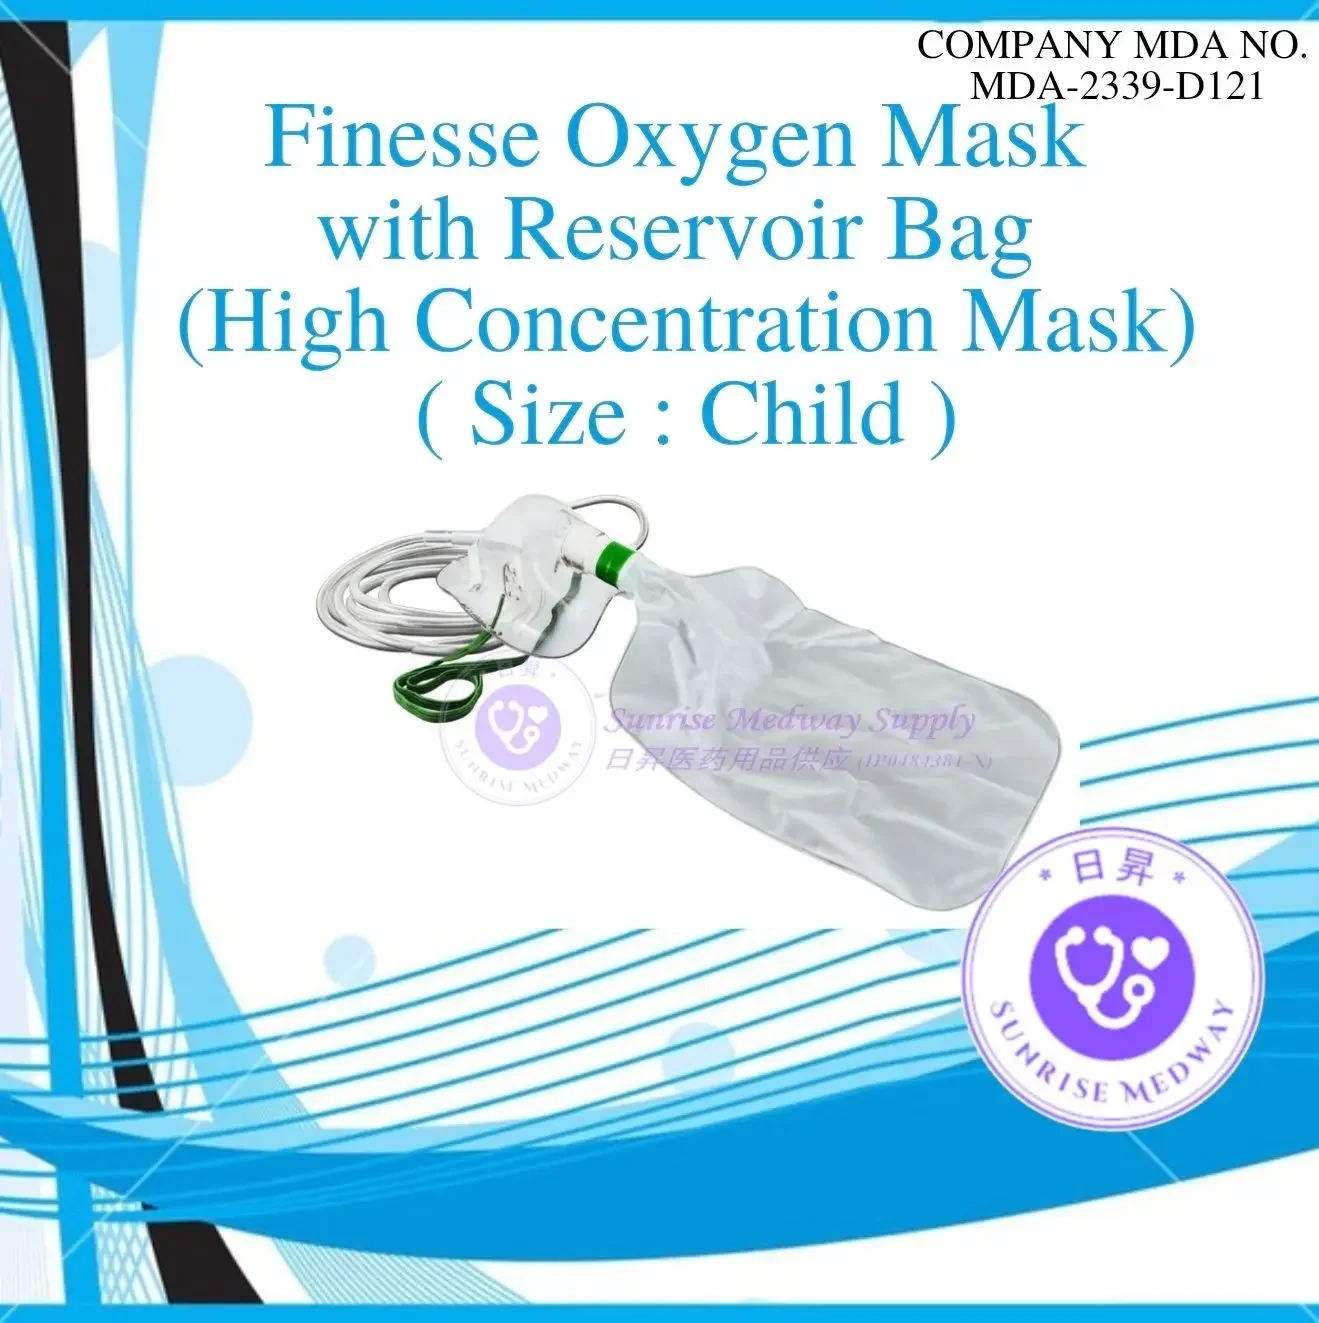 Finesse Oxygen Mask with Reservoir Bag (High Concentration Mask), Child, 1 pc/pkt